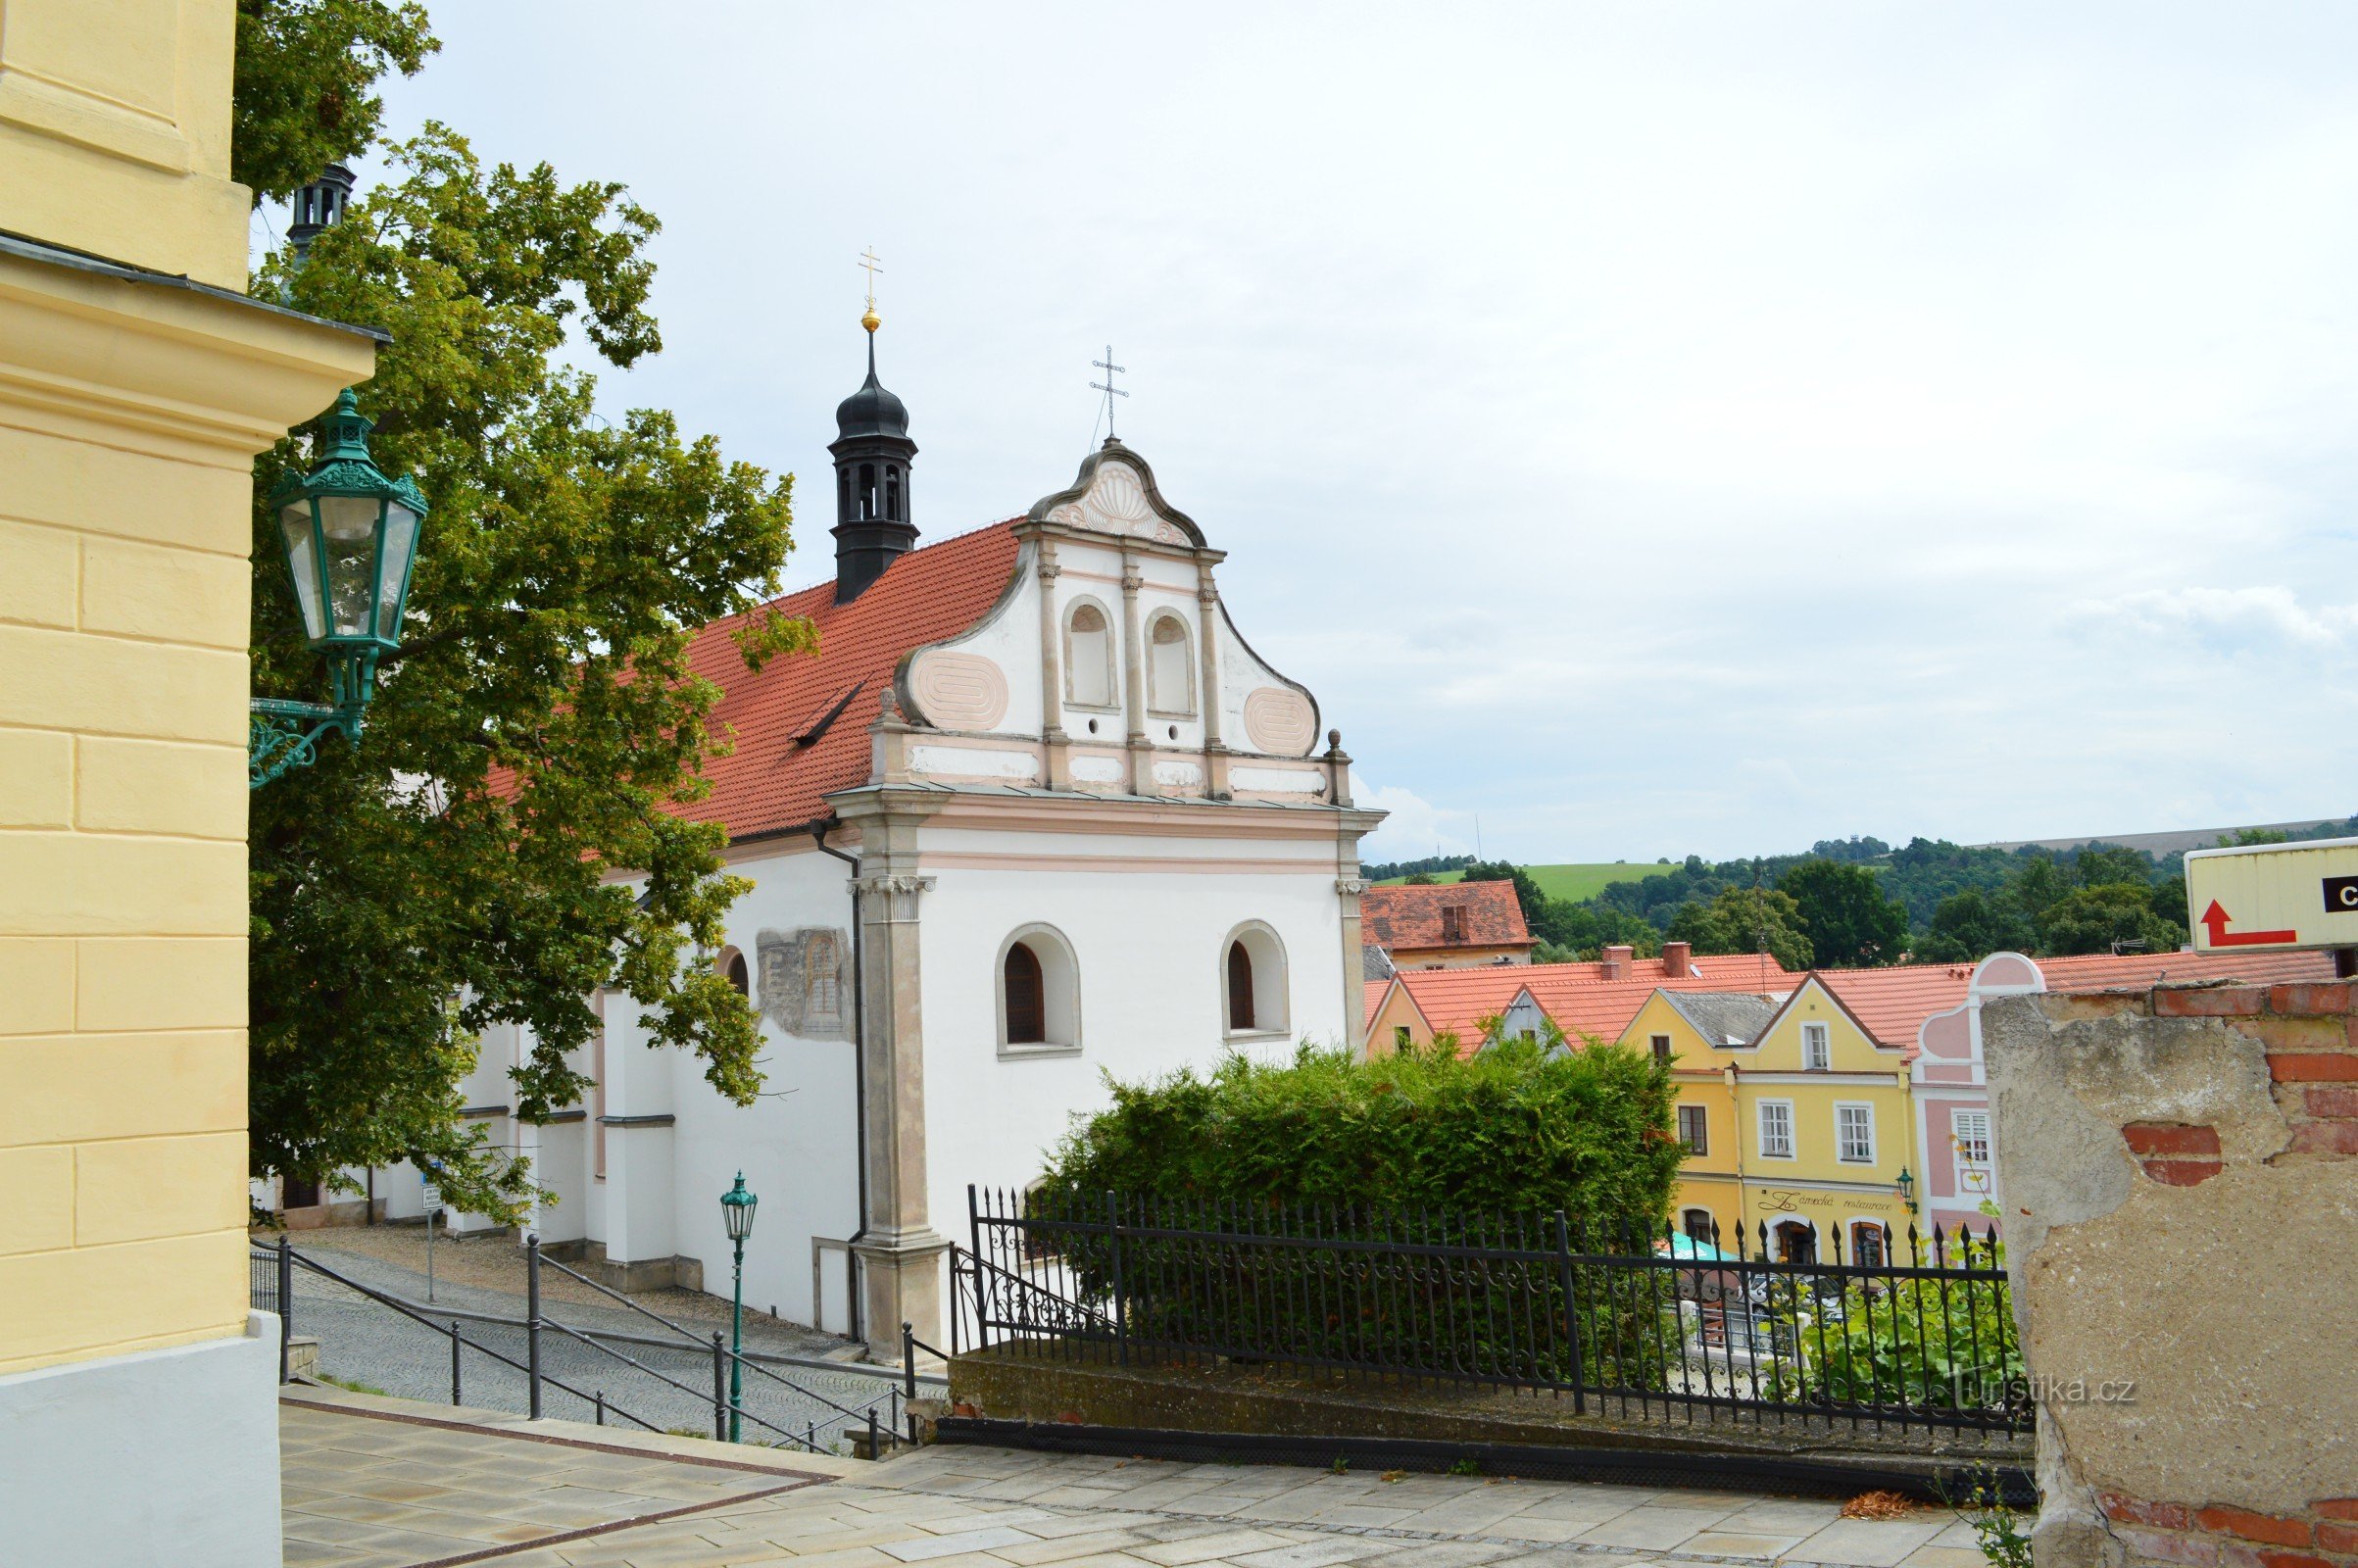 Horšovský Týn slott